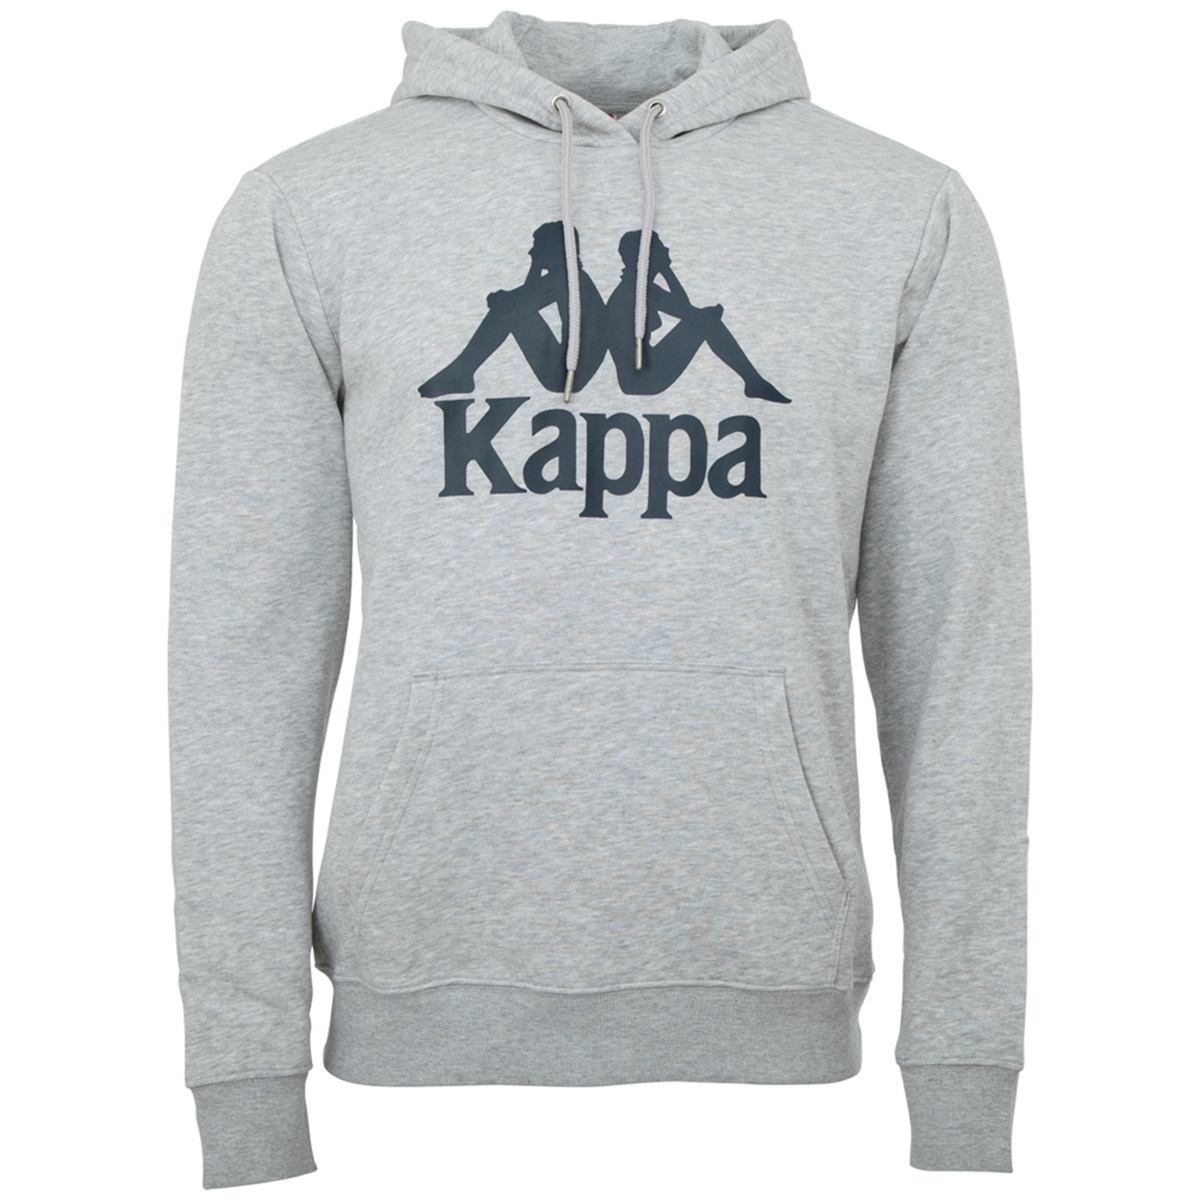 Kappa Unisex Kids Hooded Sweatshirt grey 705322 18M